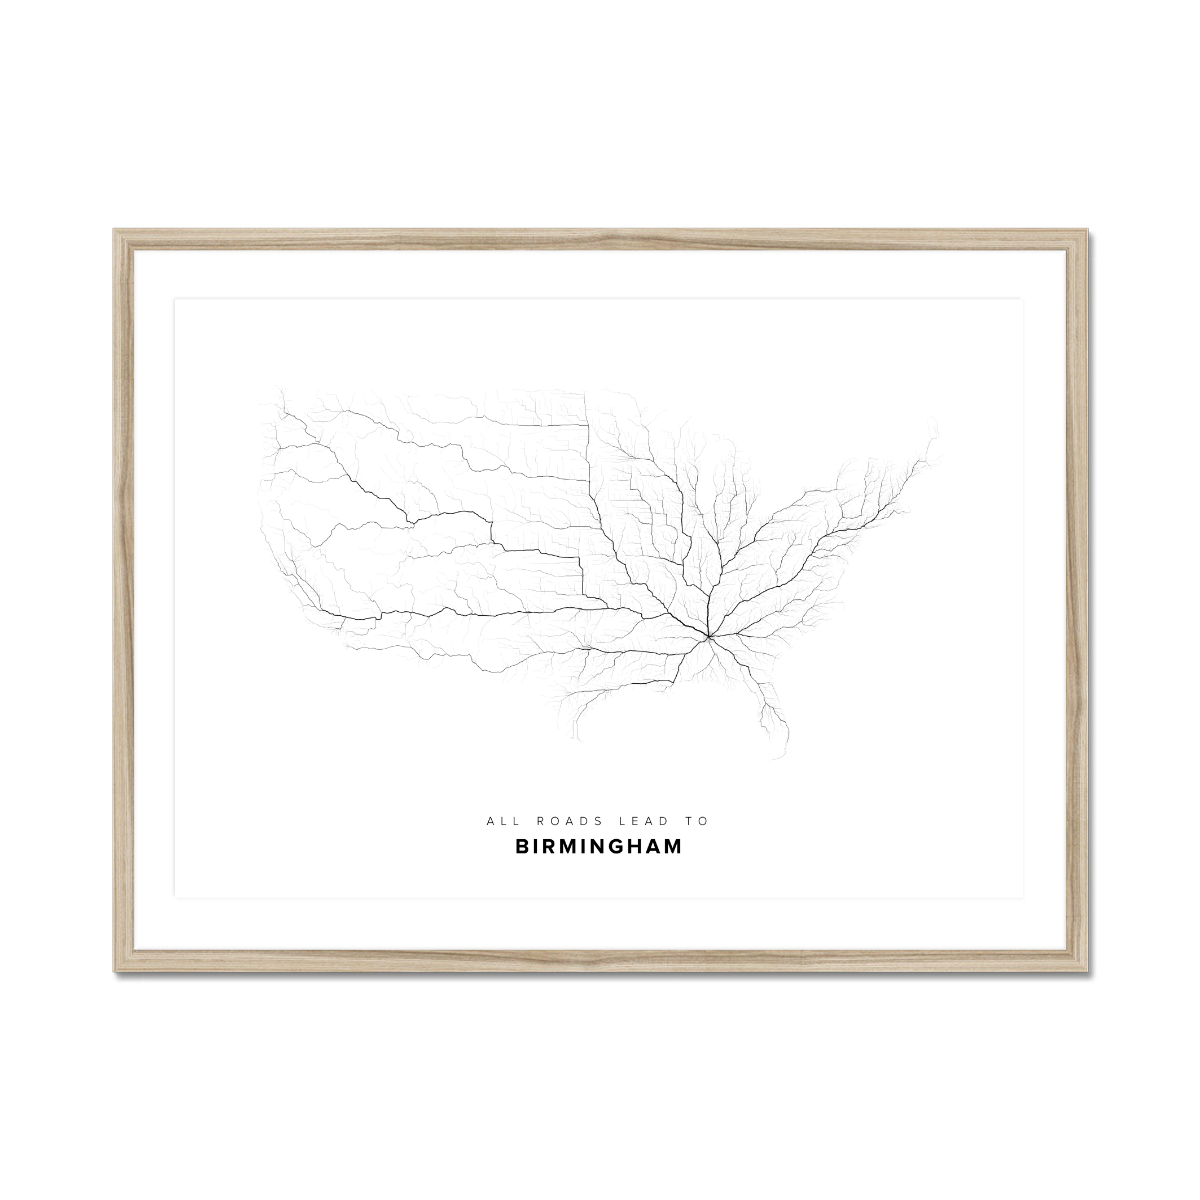 All roads lead to Birmingham (United States of America) Fine Art Map Print